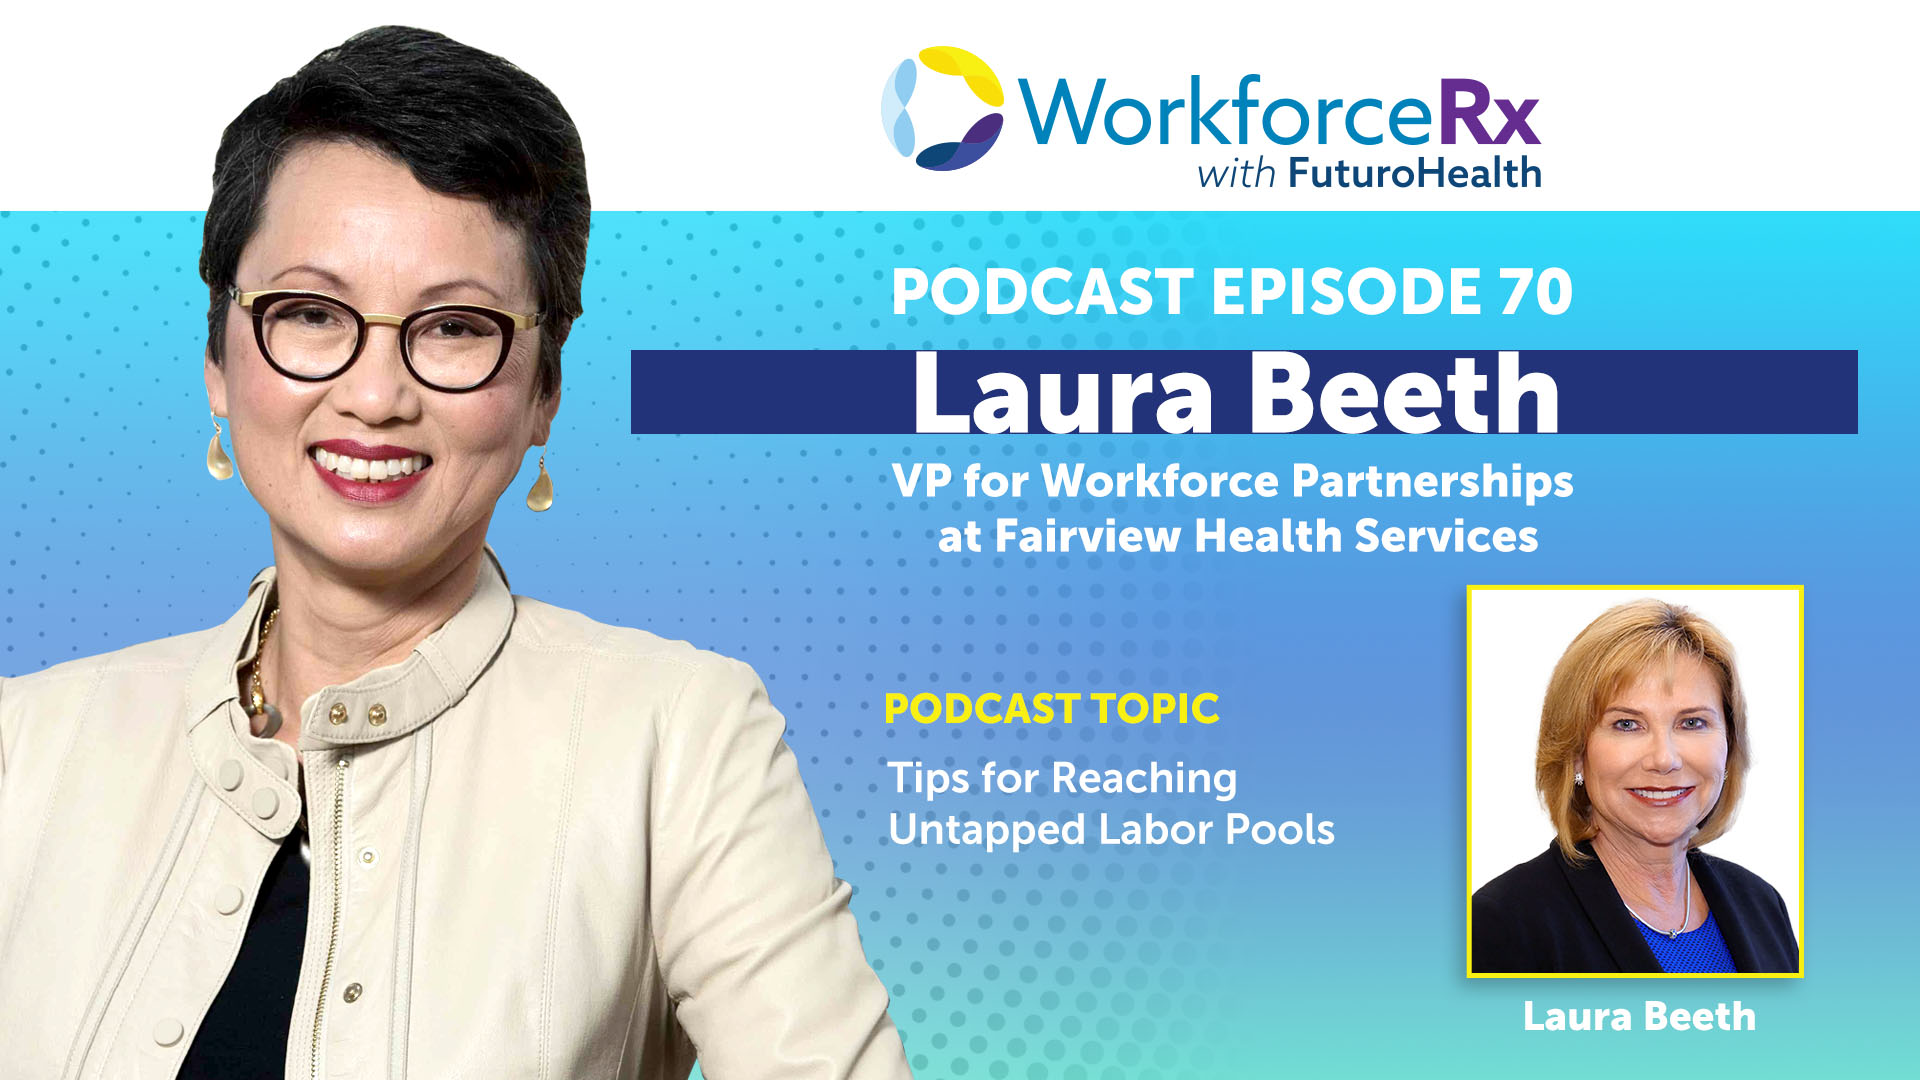 EP70 WorkforceRx Podcast Laura Beeth